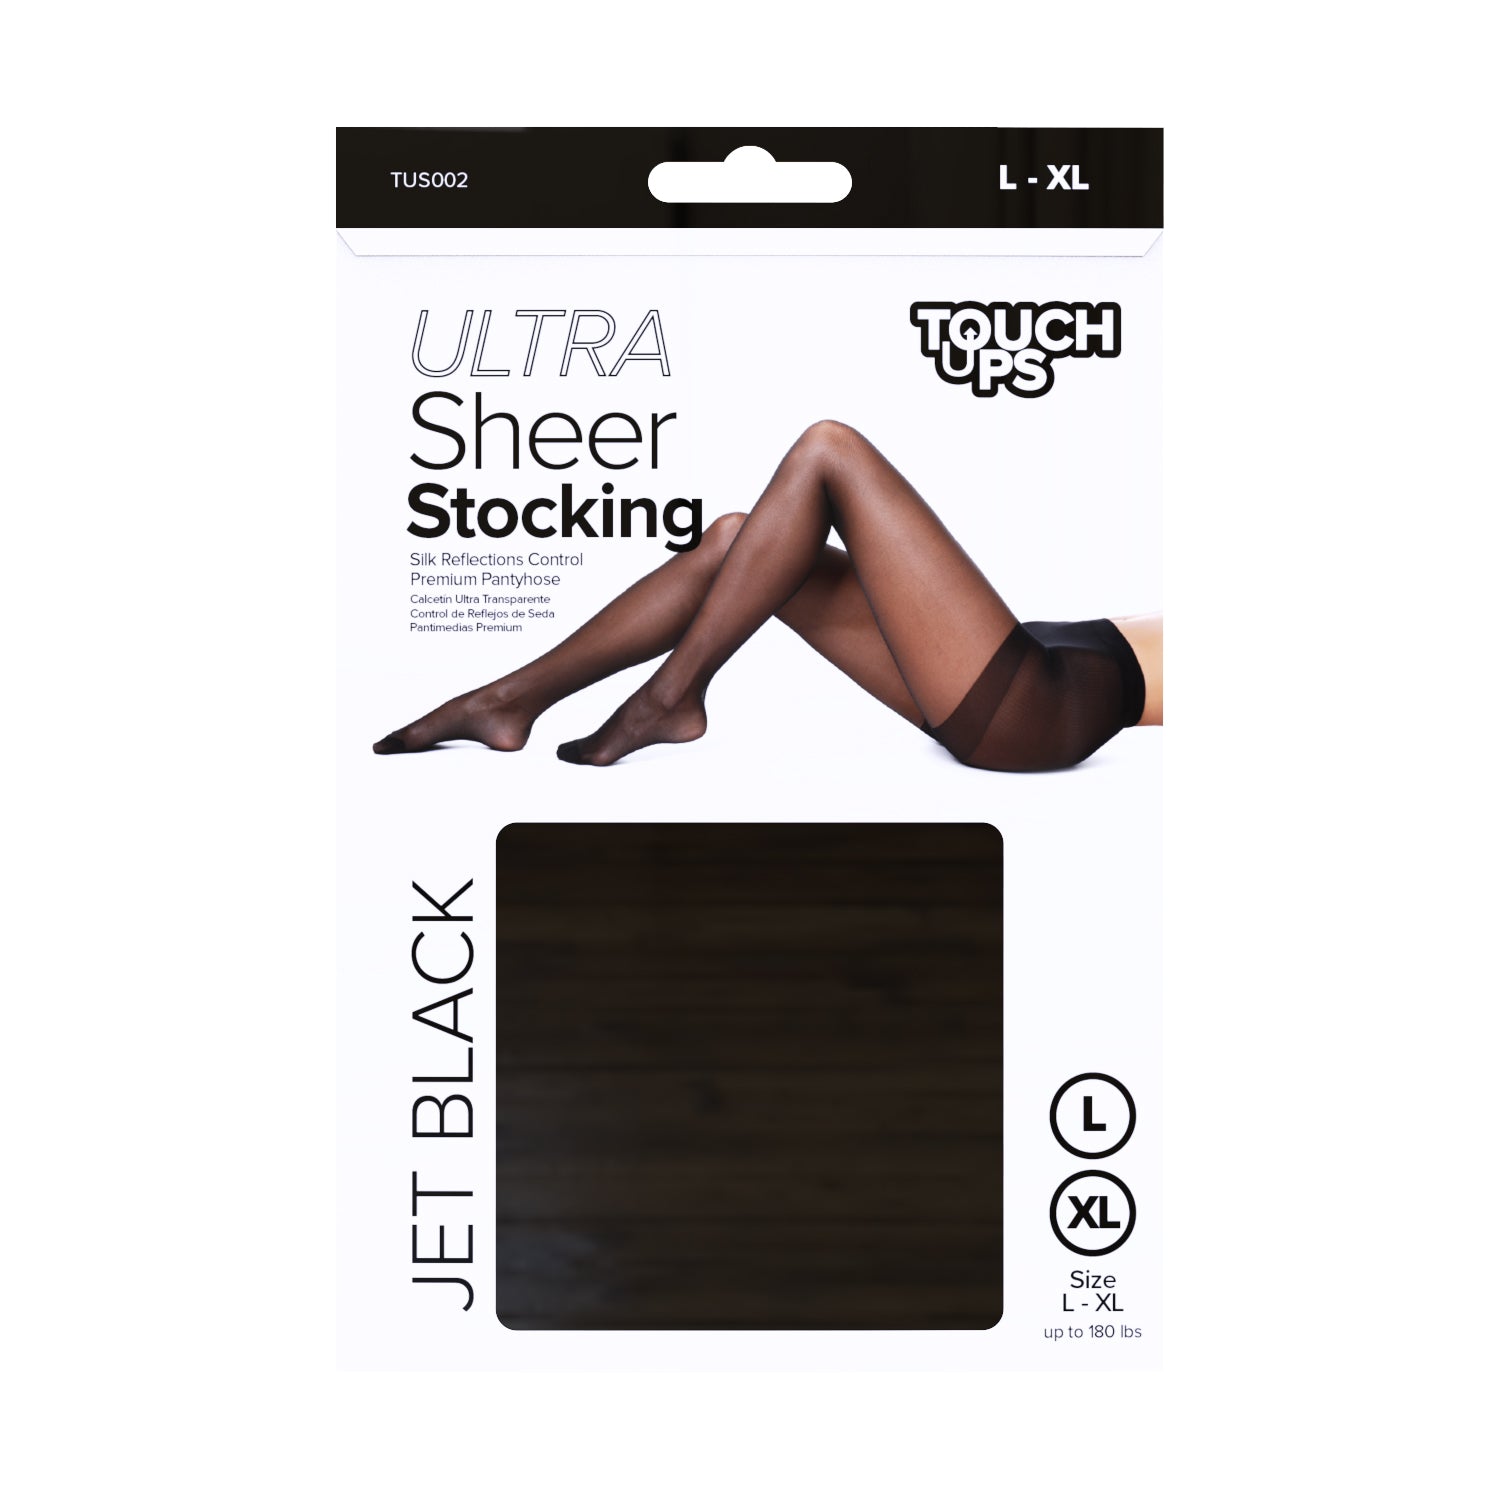 TouchUps Ultra Sheer Stocking